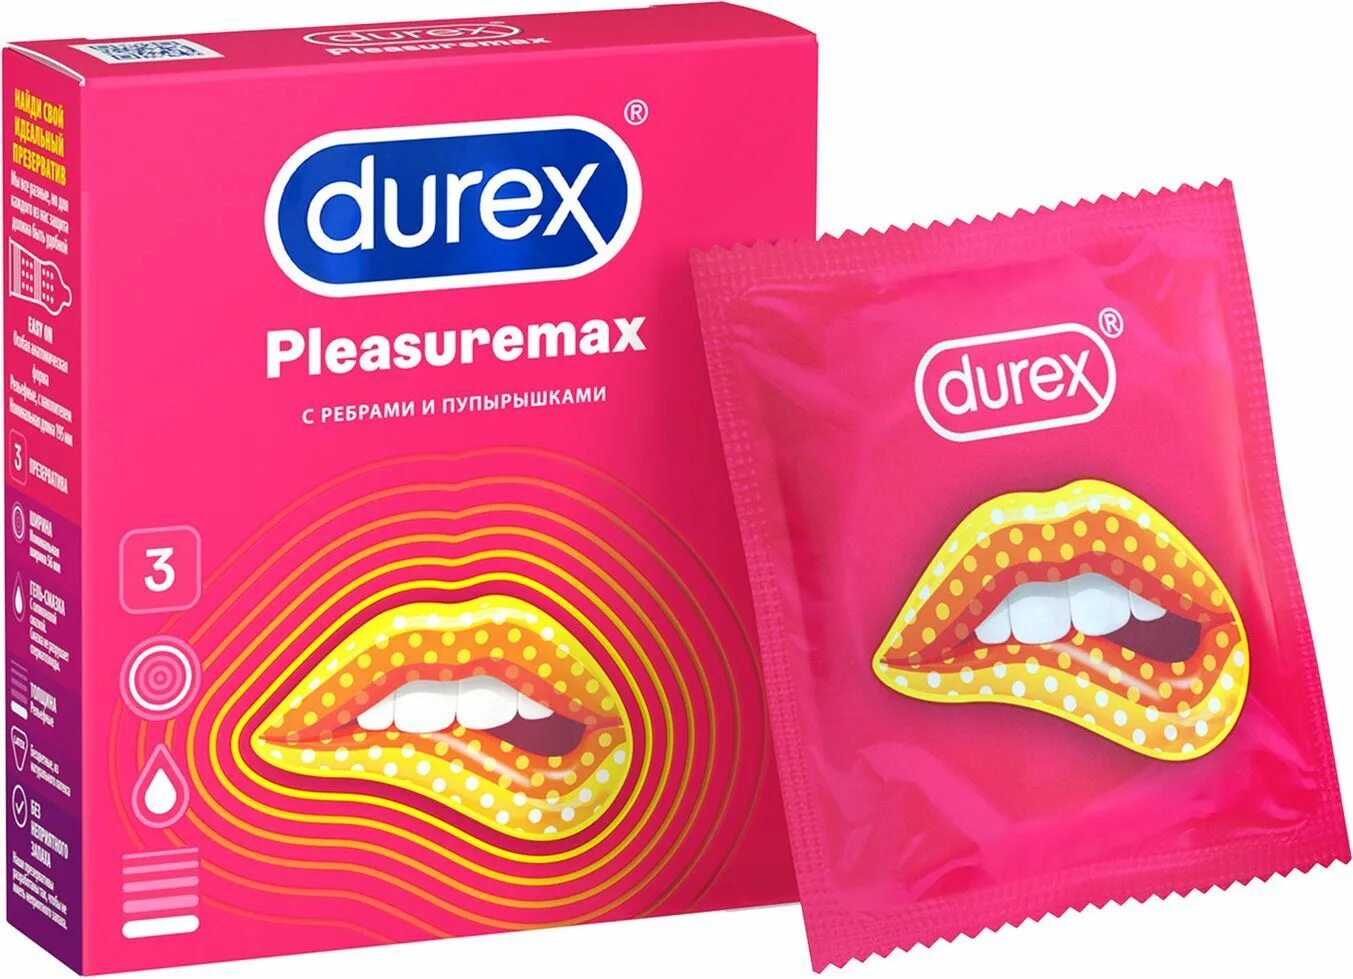 Durex 3шт Pleasuremax. Презервативы дюрекс Pleasuremax. Презервативы Durex Pleasuremax с ребрами и пупырышками №12. Презервативы Durex Pleasuremax, презерватив, с ребрами и пупырышками, 3 шт..